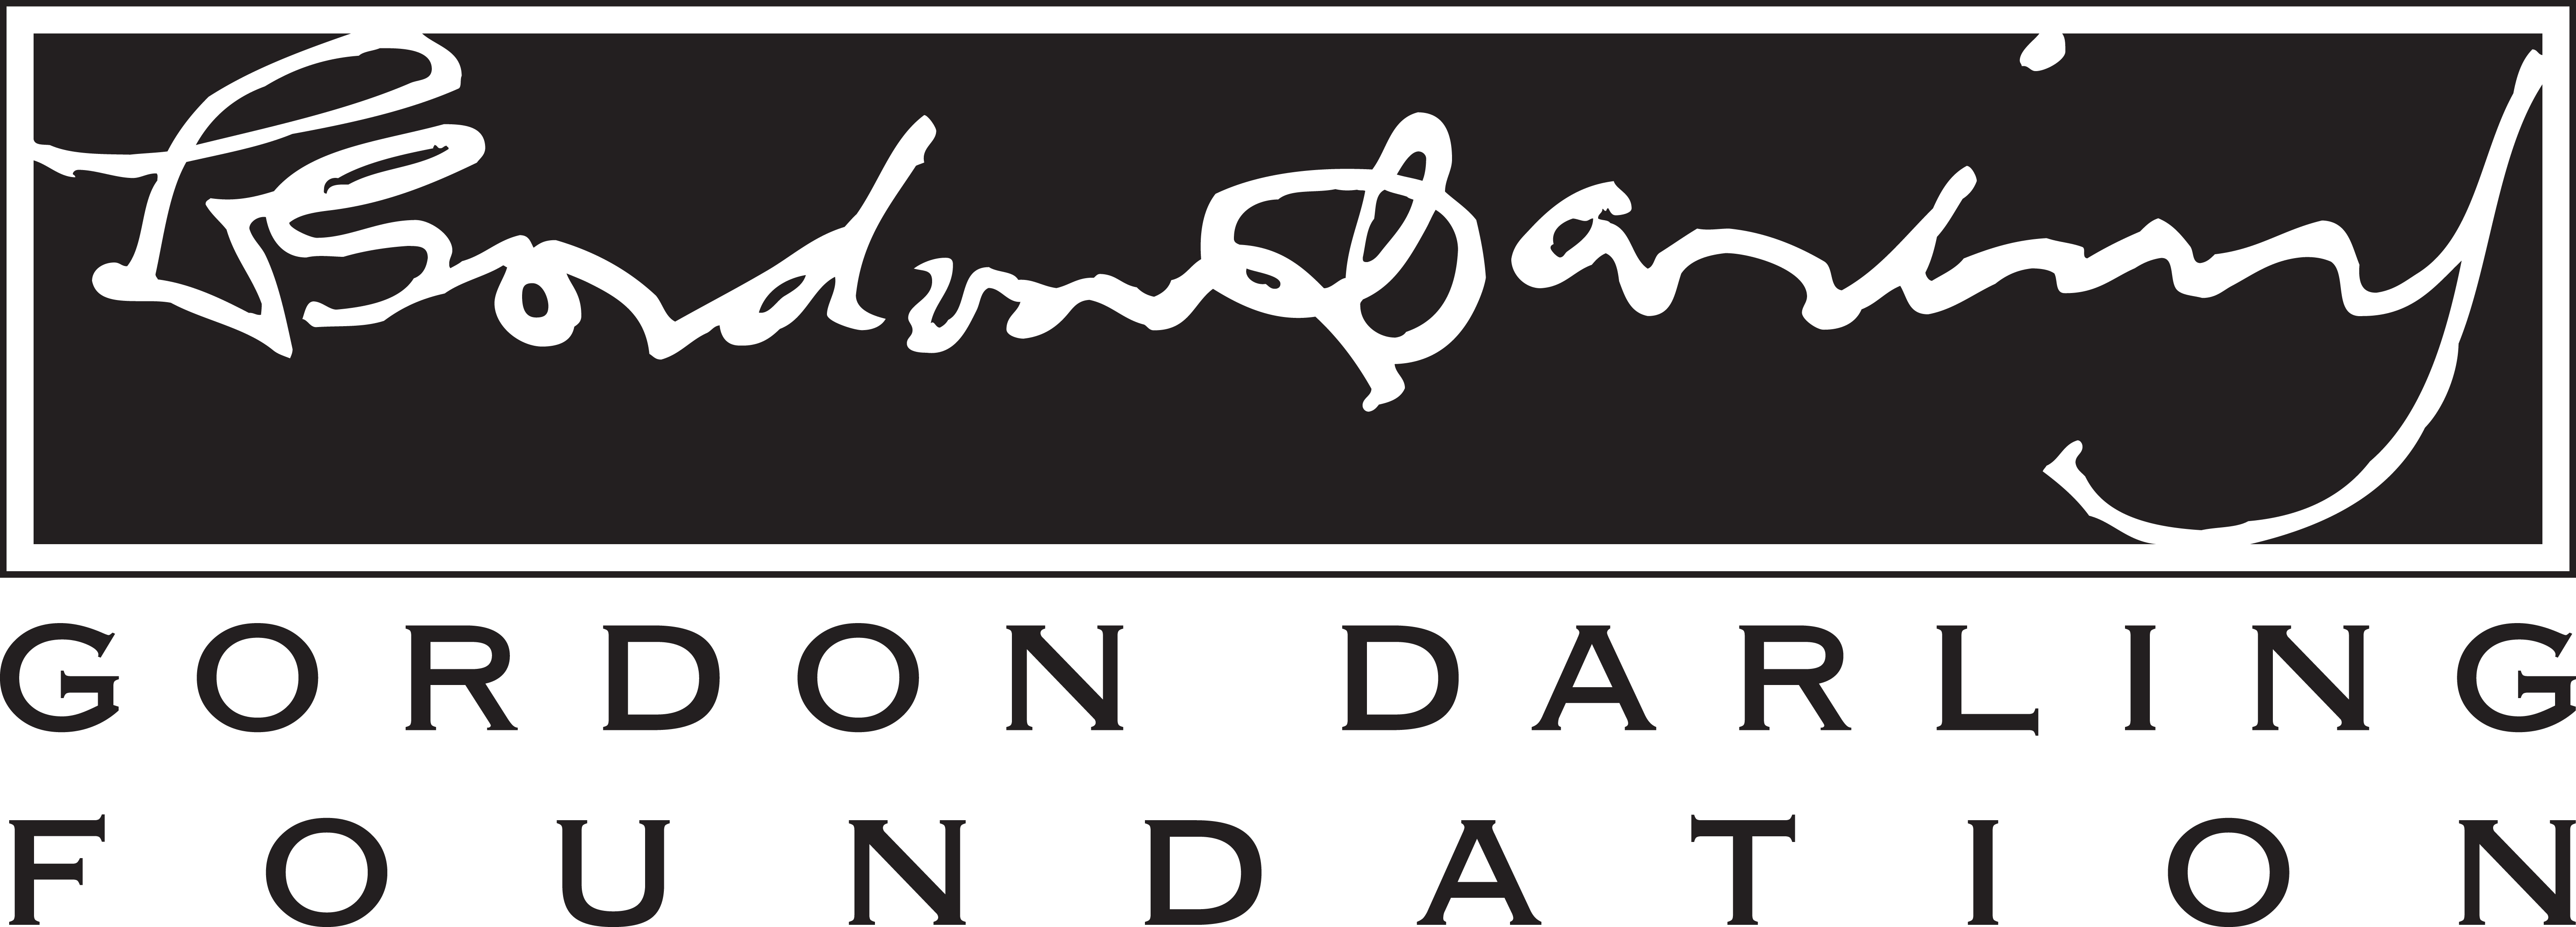 Gordon Darling Foundation logo